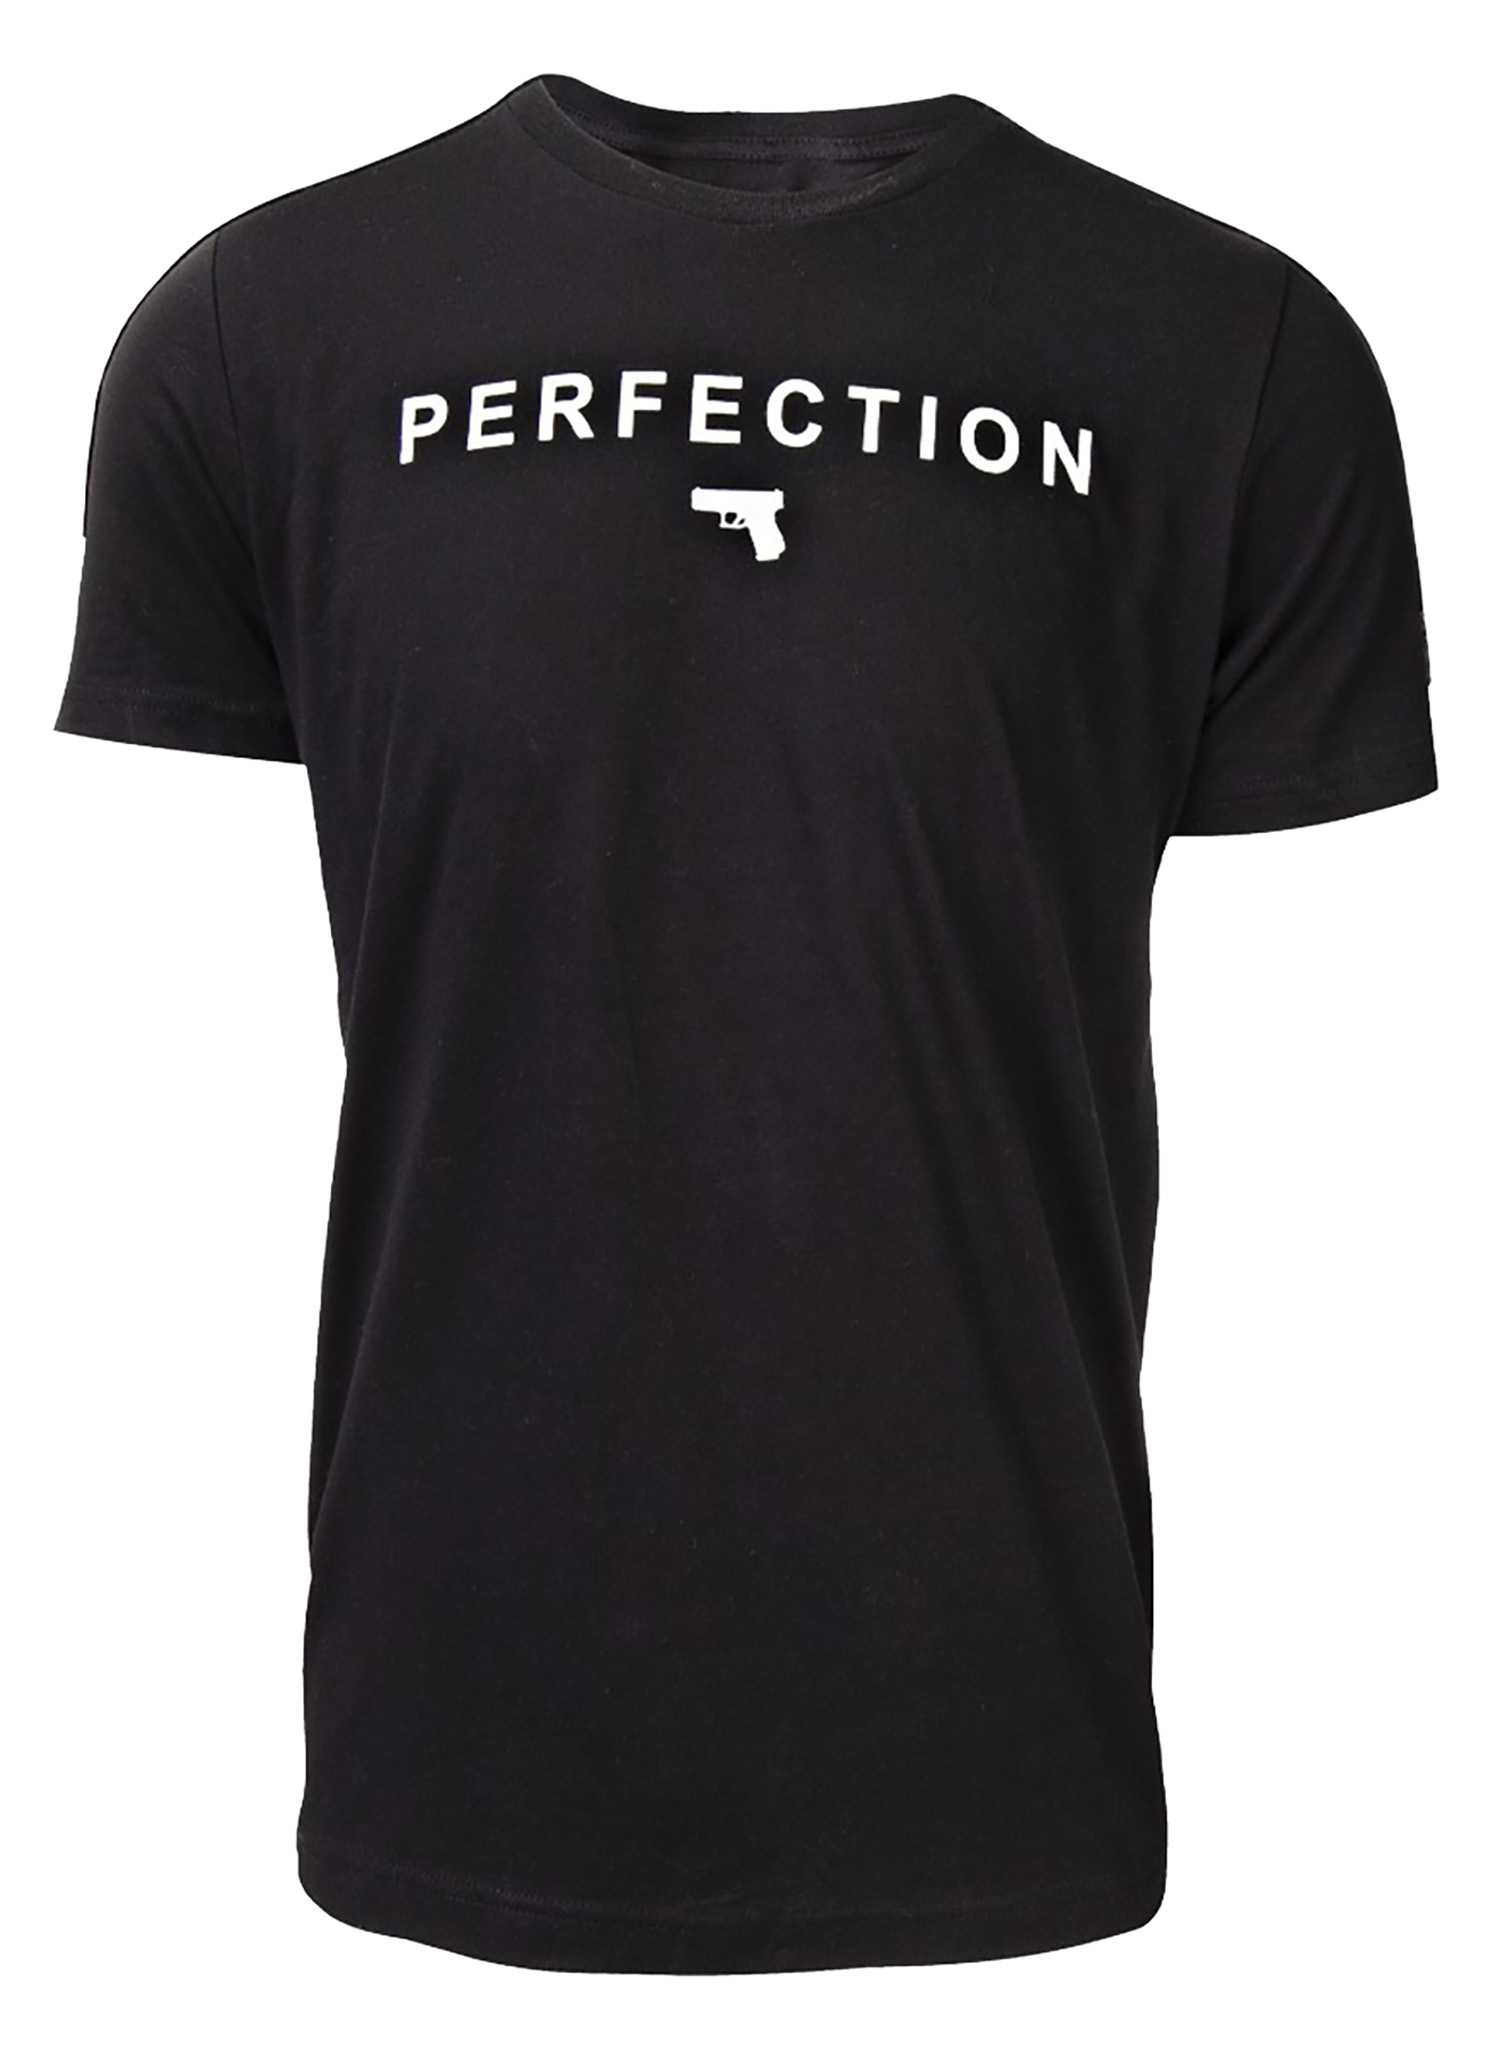 Glock AA75126 Perfection Pistol T-Shirt Black Large Short Sleeve